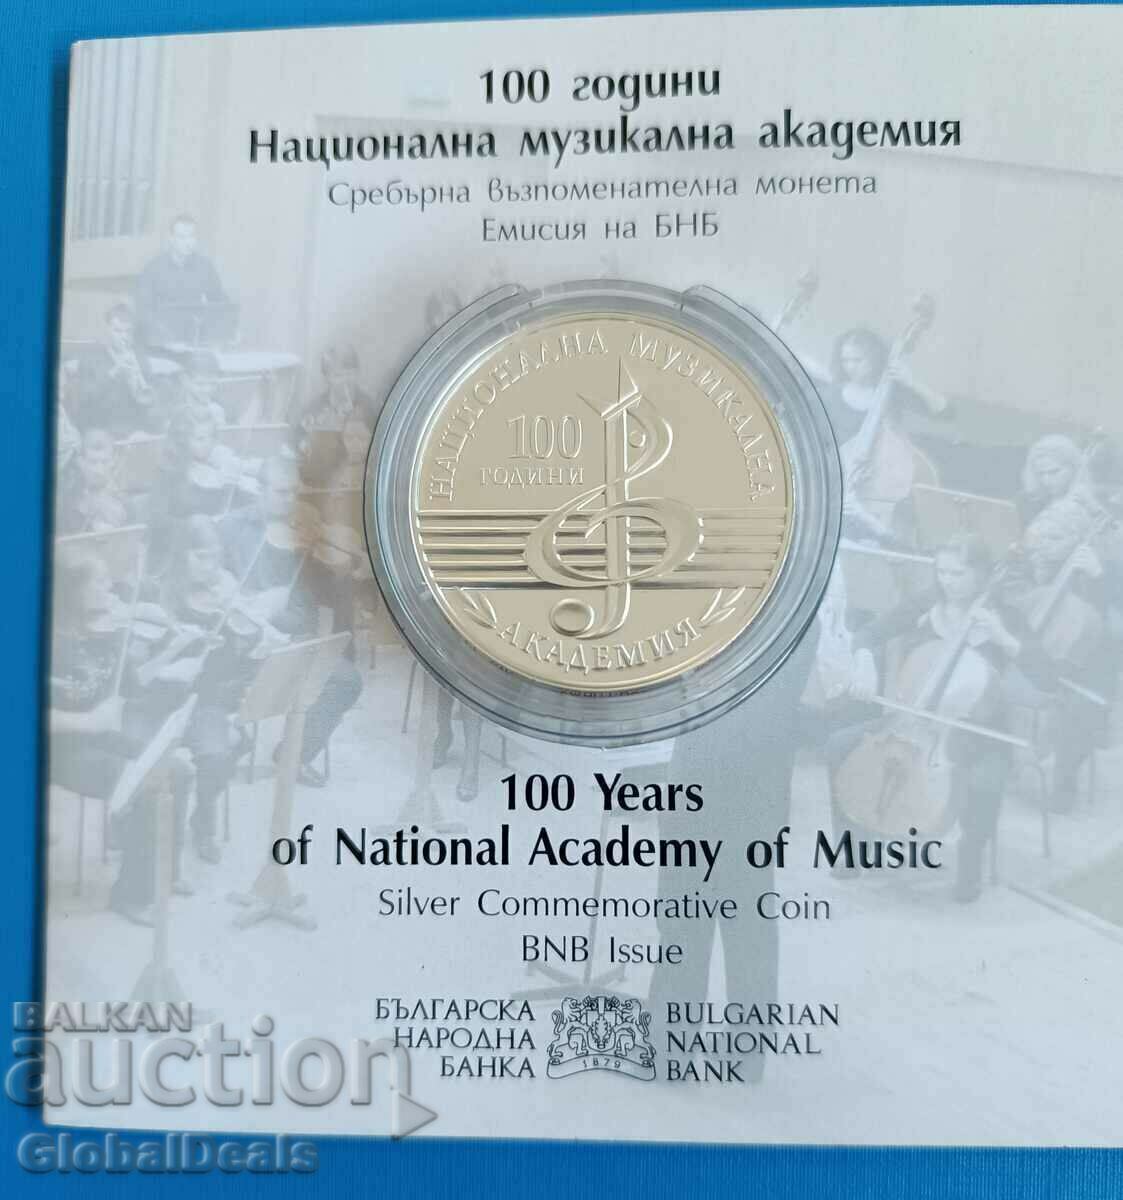 BGN 10, 2021 - 100 χρόνια Μουσικής Ακαδημίας